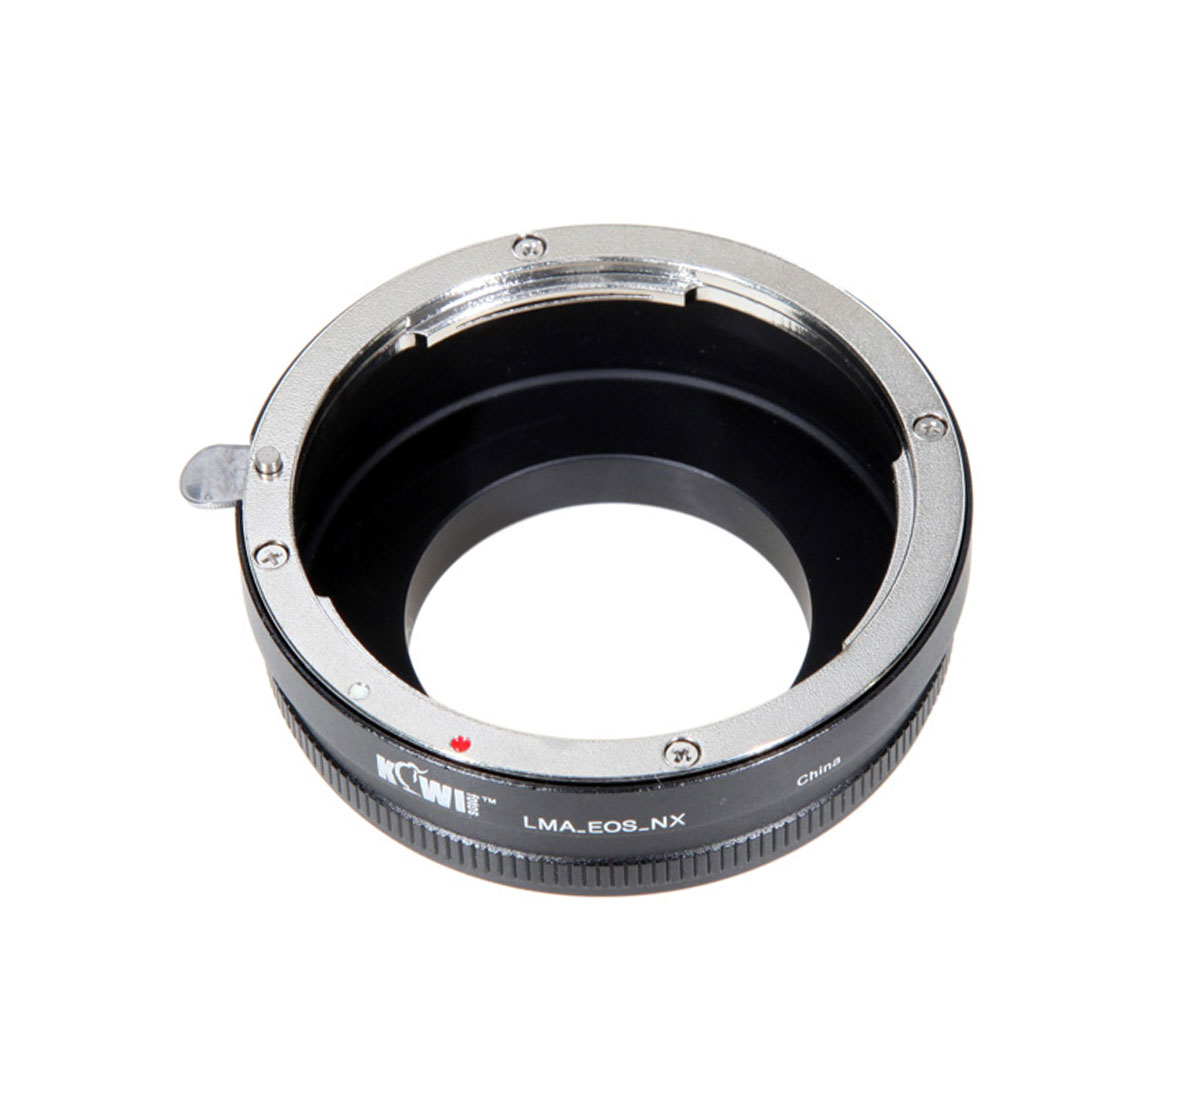 Objektivadapter für Canon EF Objektive an Samsung NX Kameras